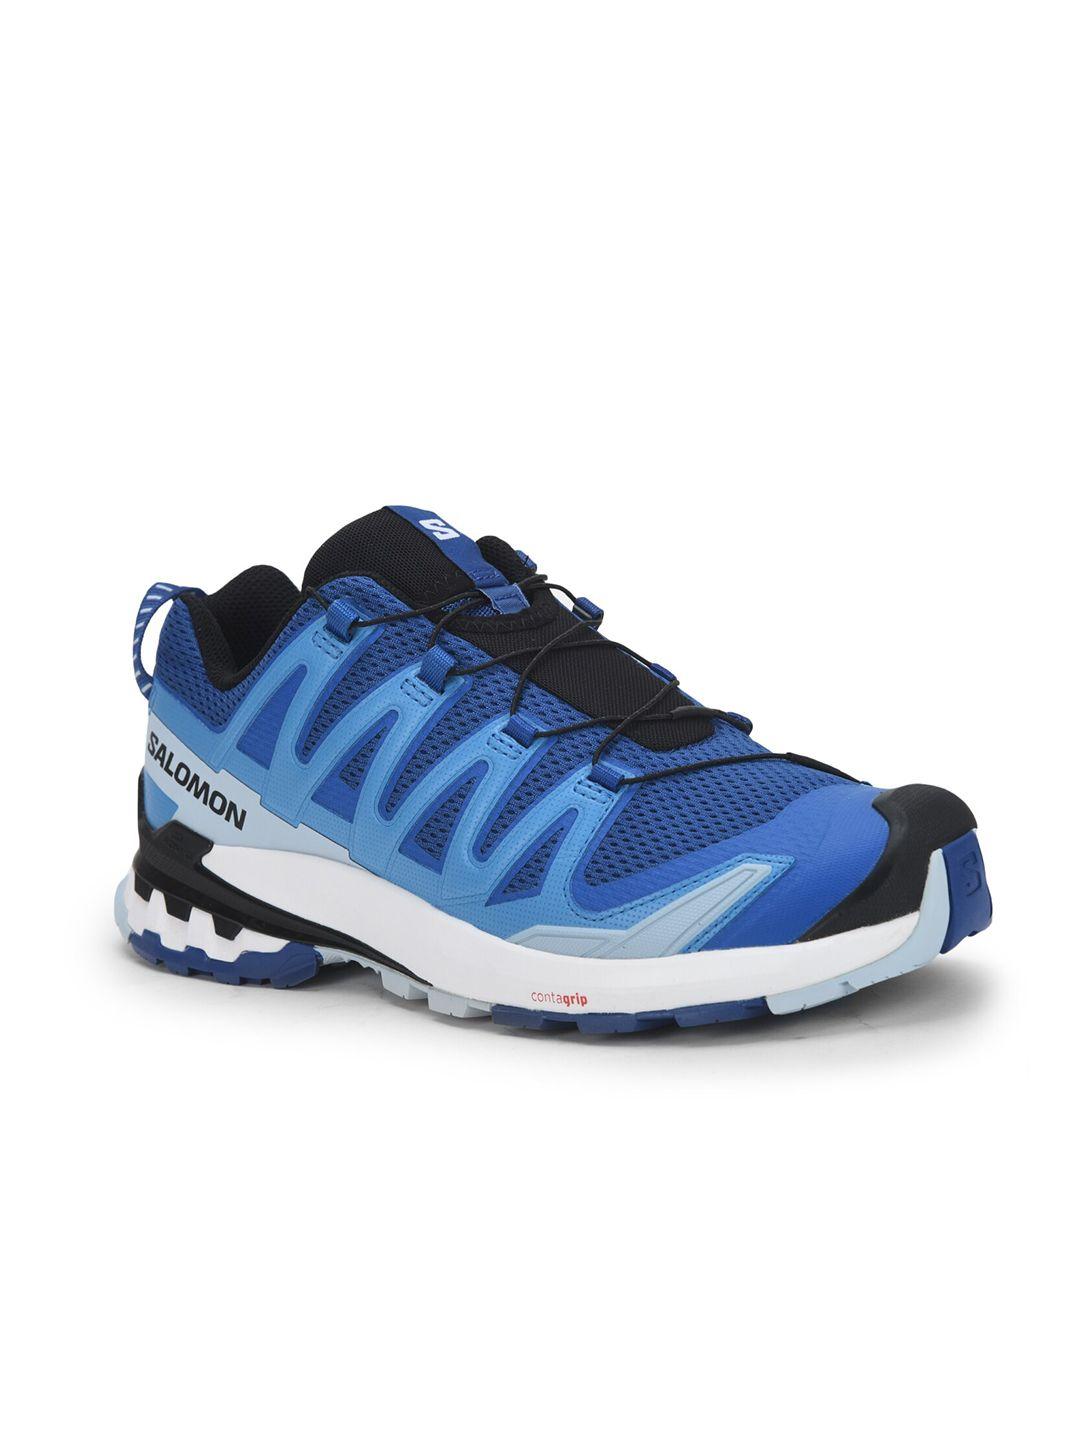 Salomon Men Blue Running Shoes